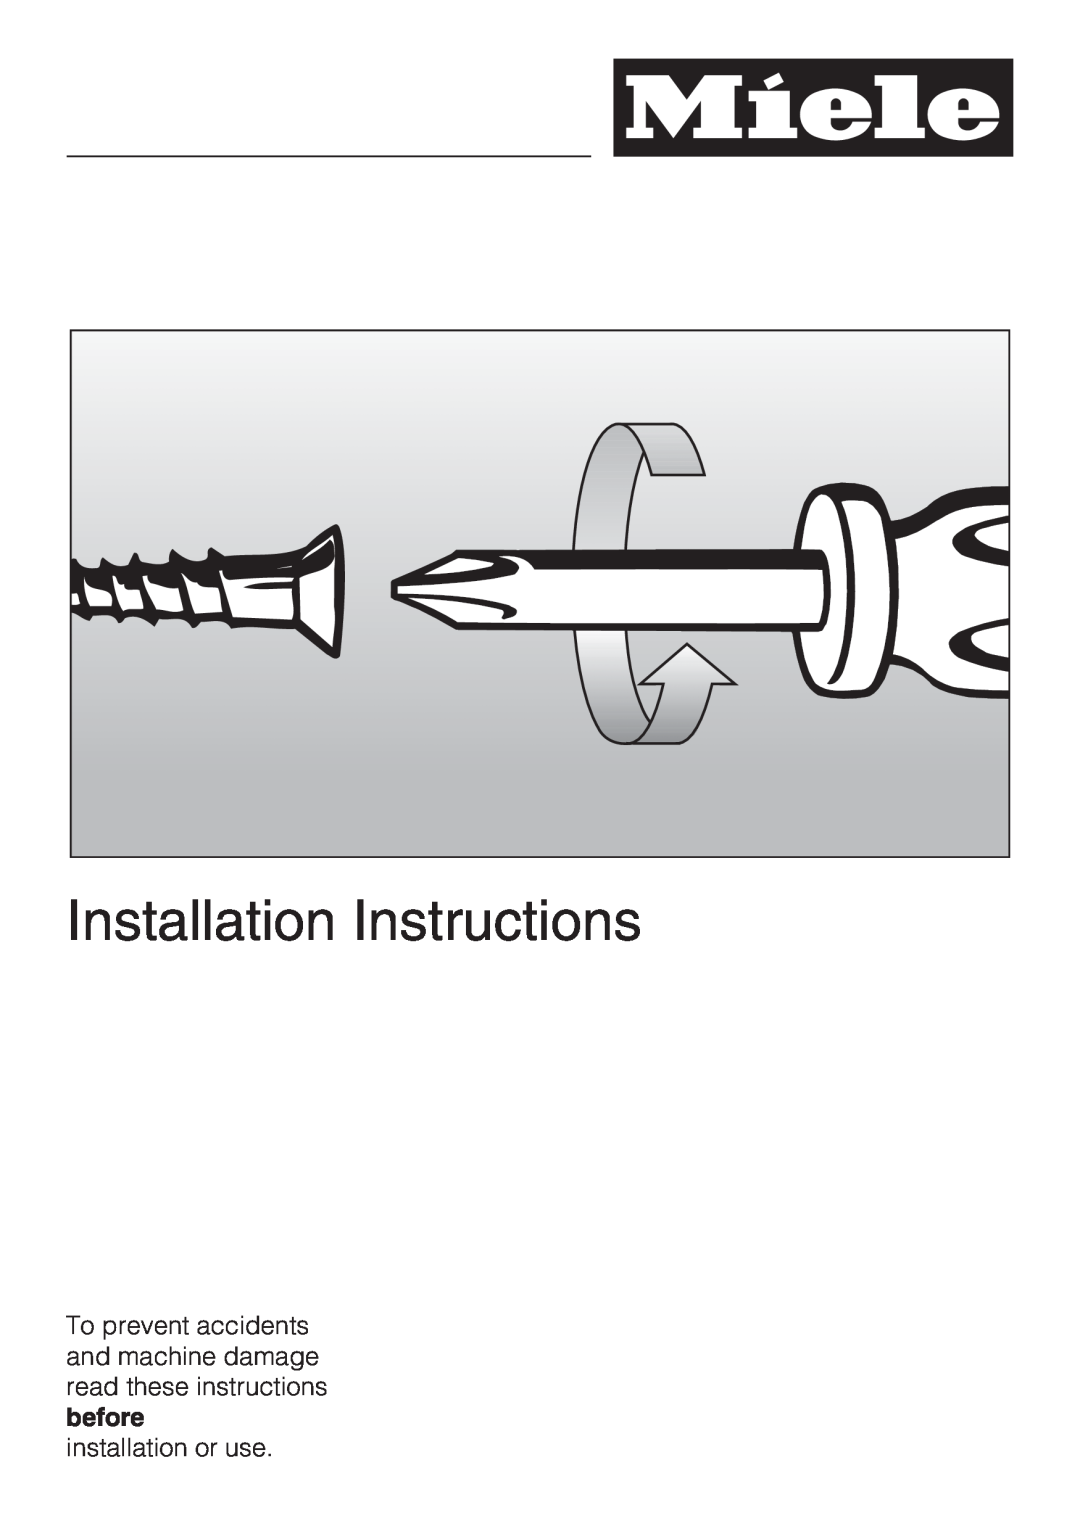 Miele KM5676 installation instructions Installation Instructions, installation or use 